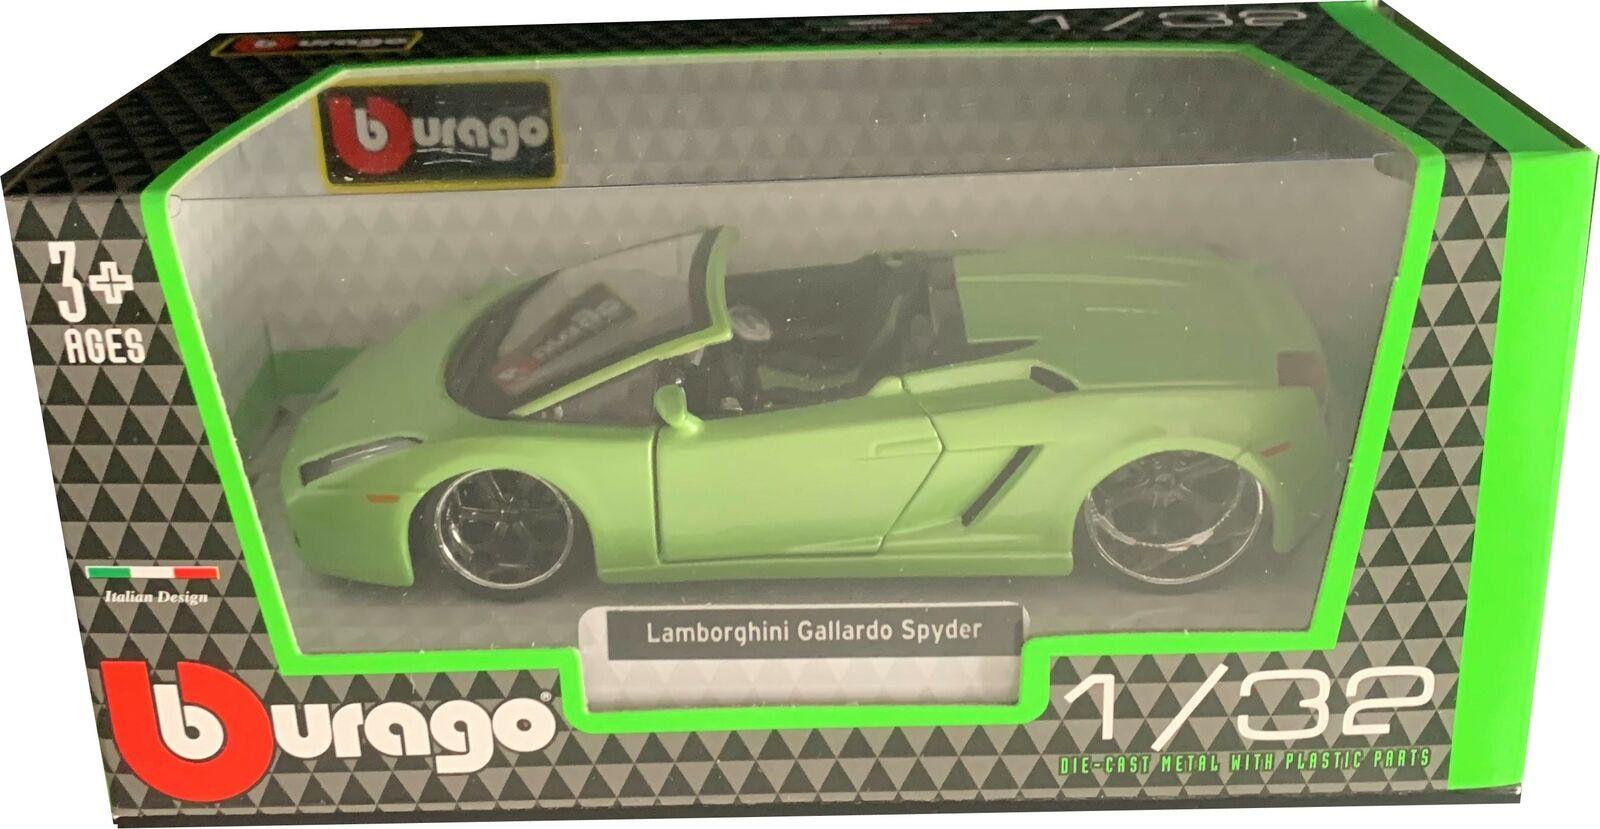 Lamborghini Gallardo Spyder in green 1:32 scale model from Bburago